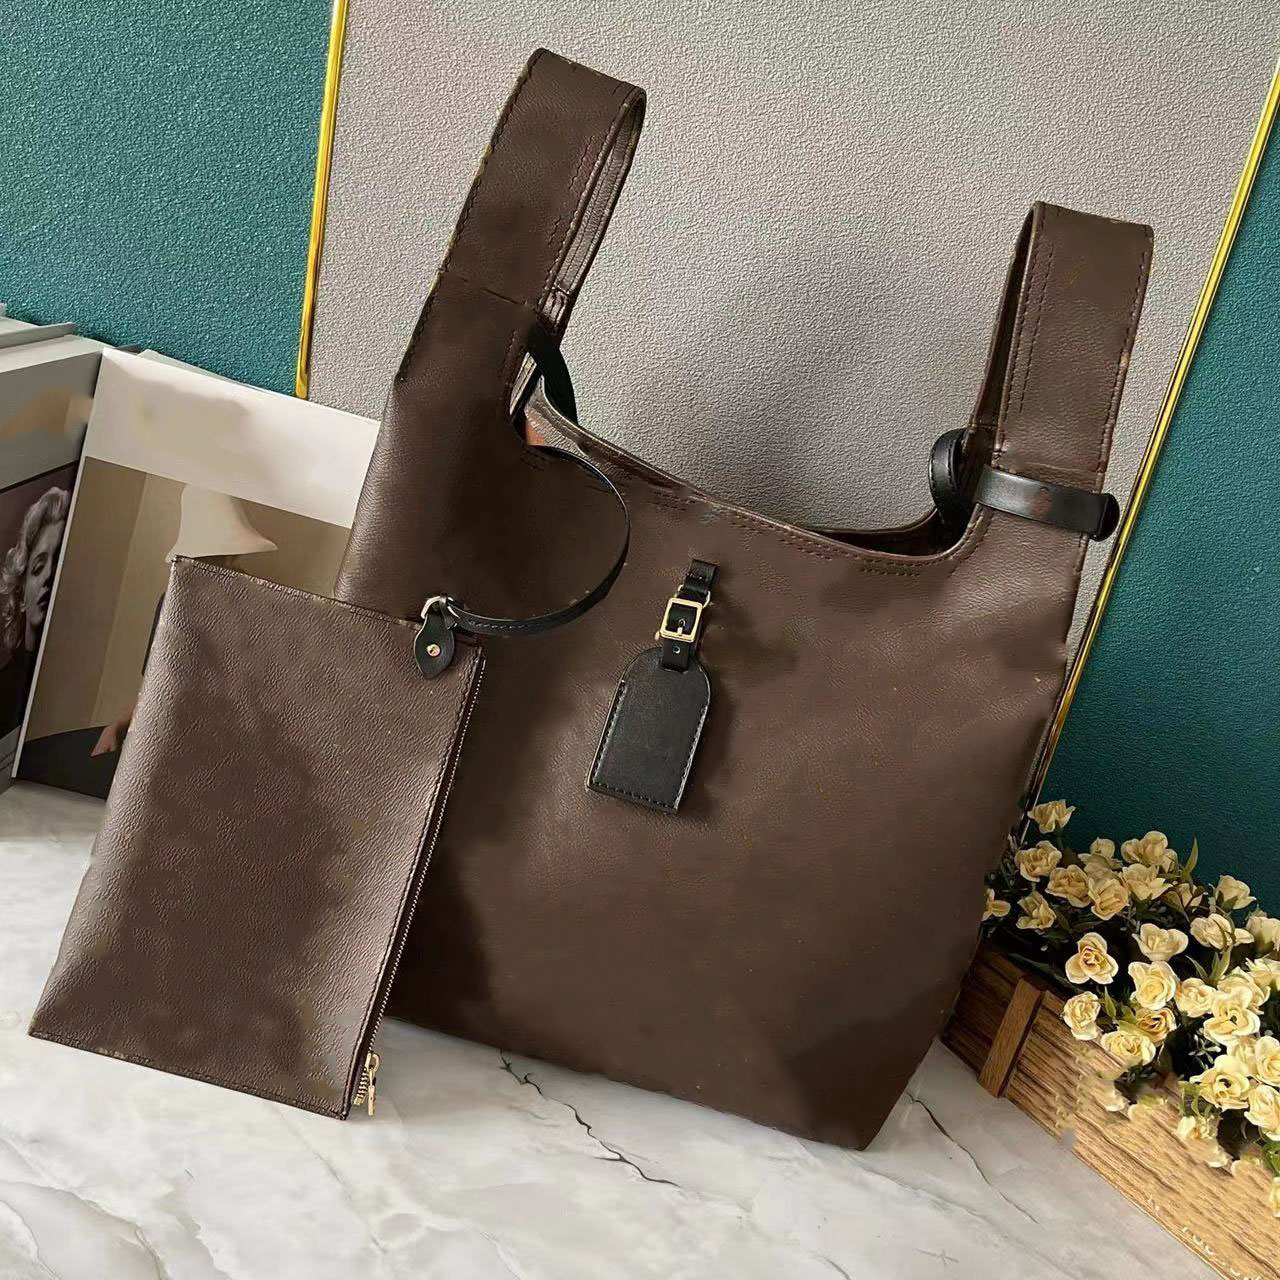 NEW dust bag Designer Bags Handbag Purses Woman Fashion Clutch Purse Chain Womens designing Crossbody Shoulder Bag #33565888